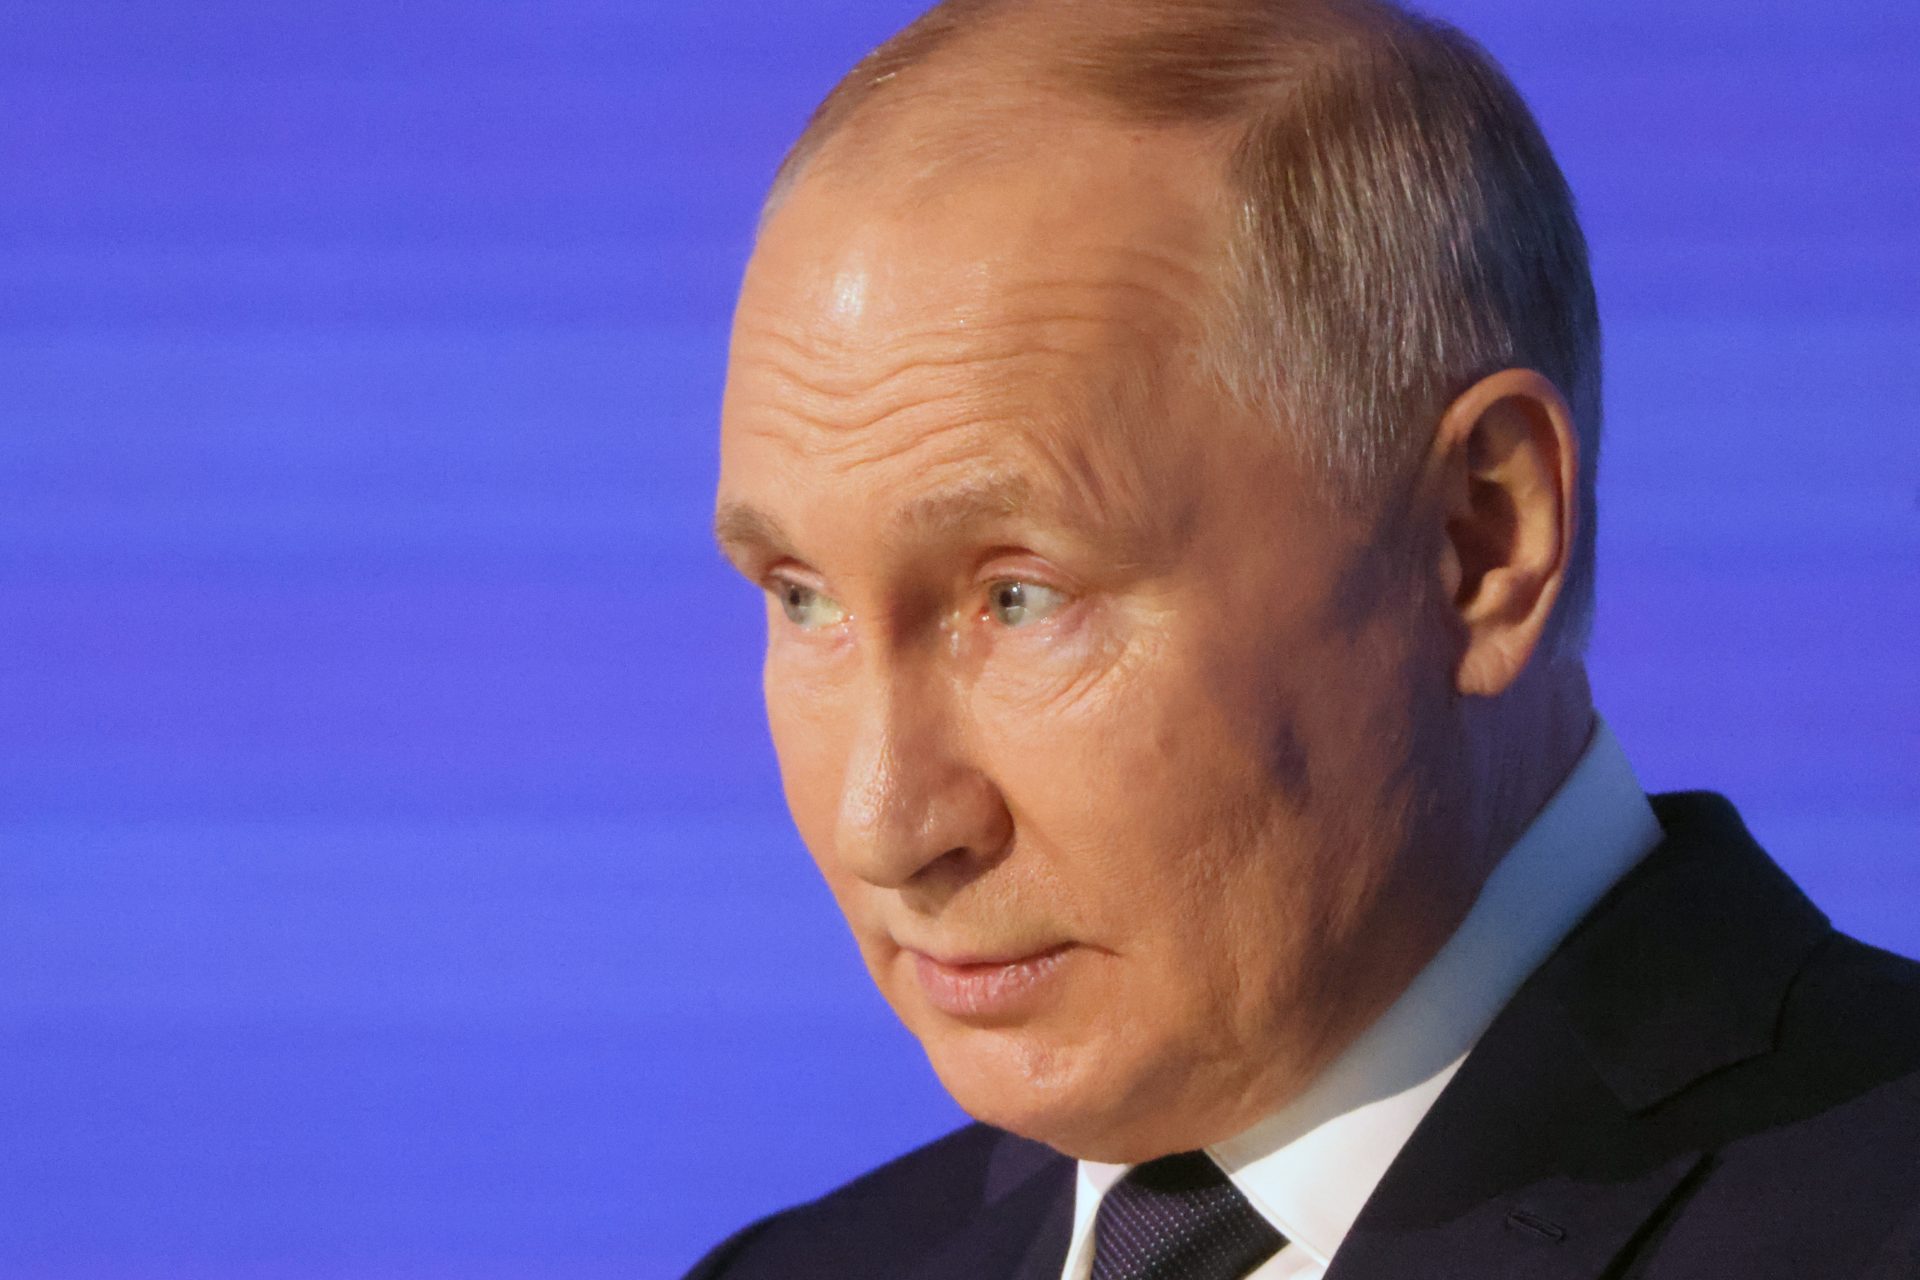 Putin is trying a new scheme to destabilize NATO